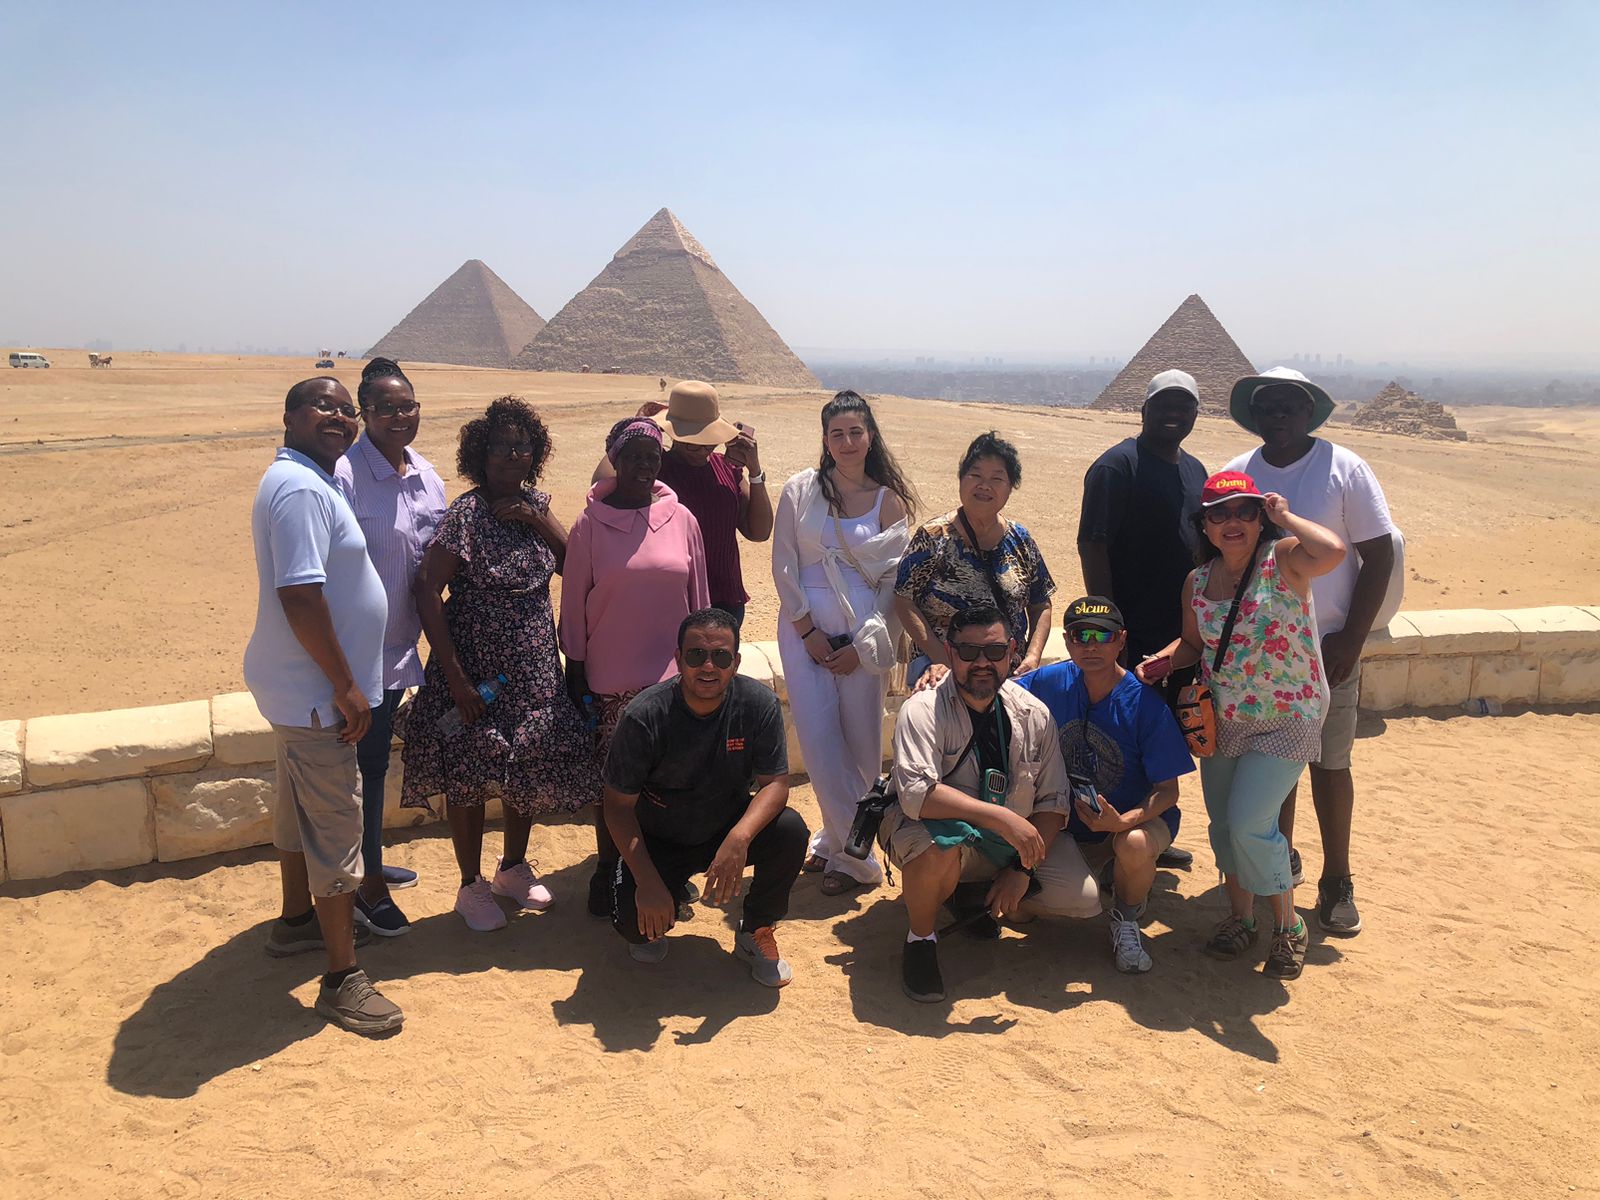 Day 2: Cairo Tour and Giza Pyramids